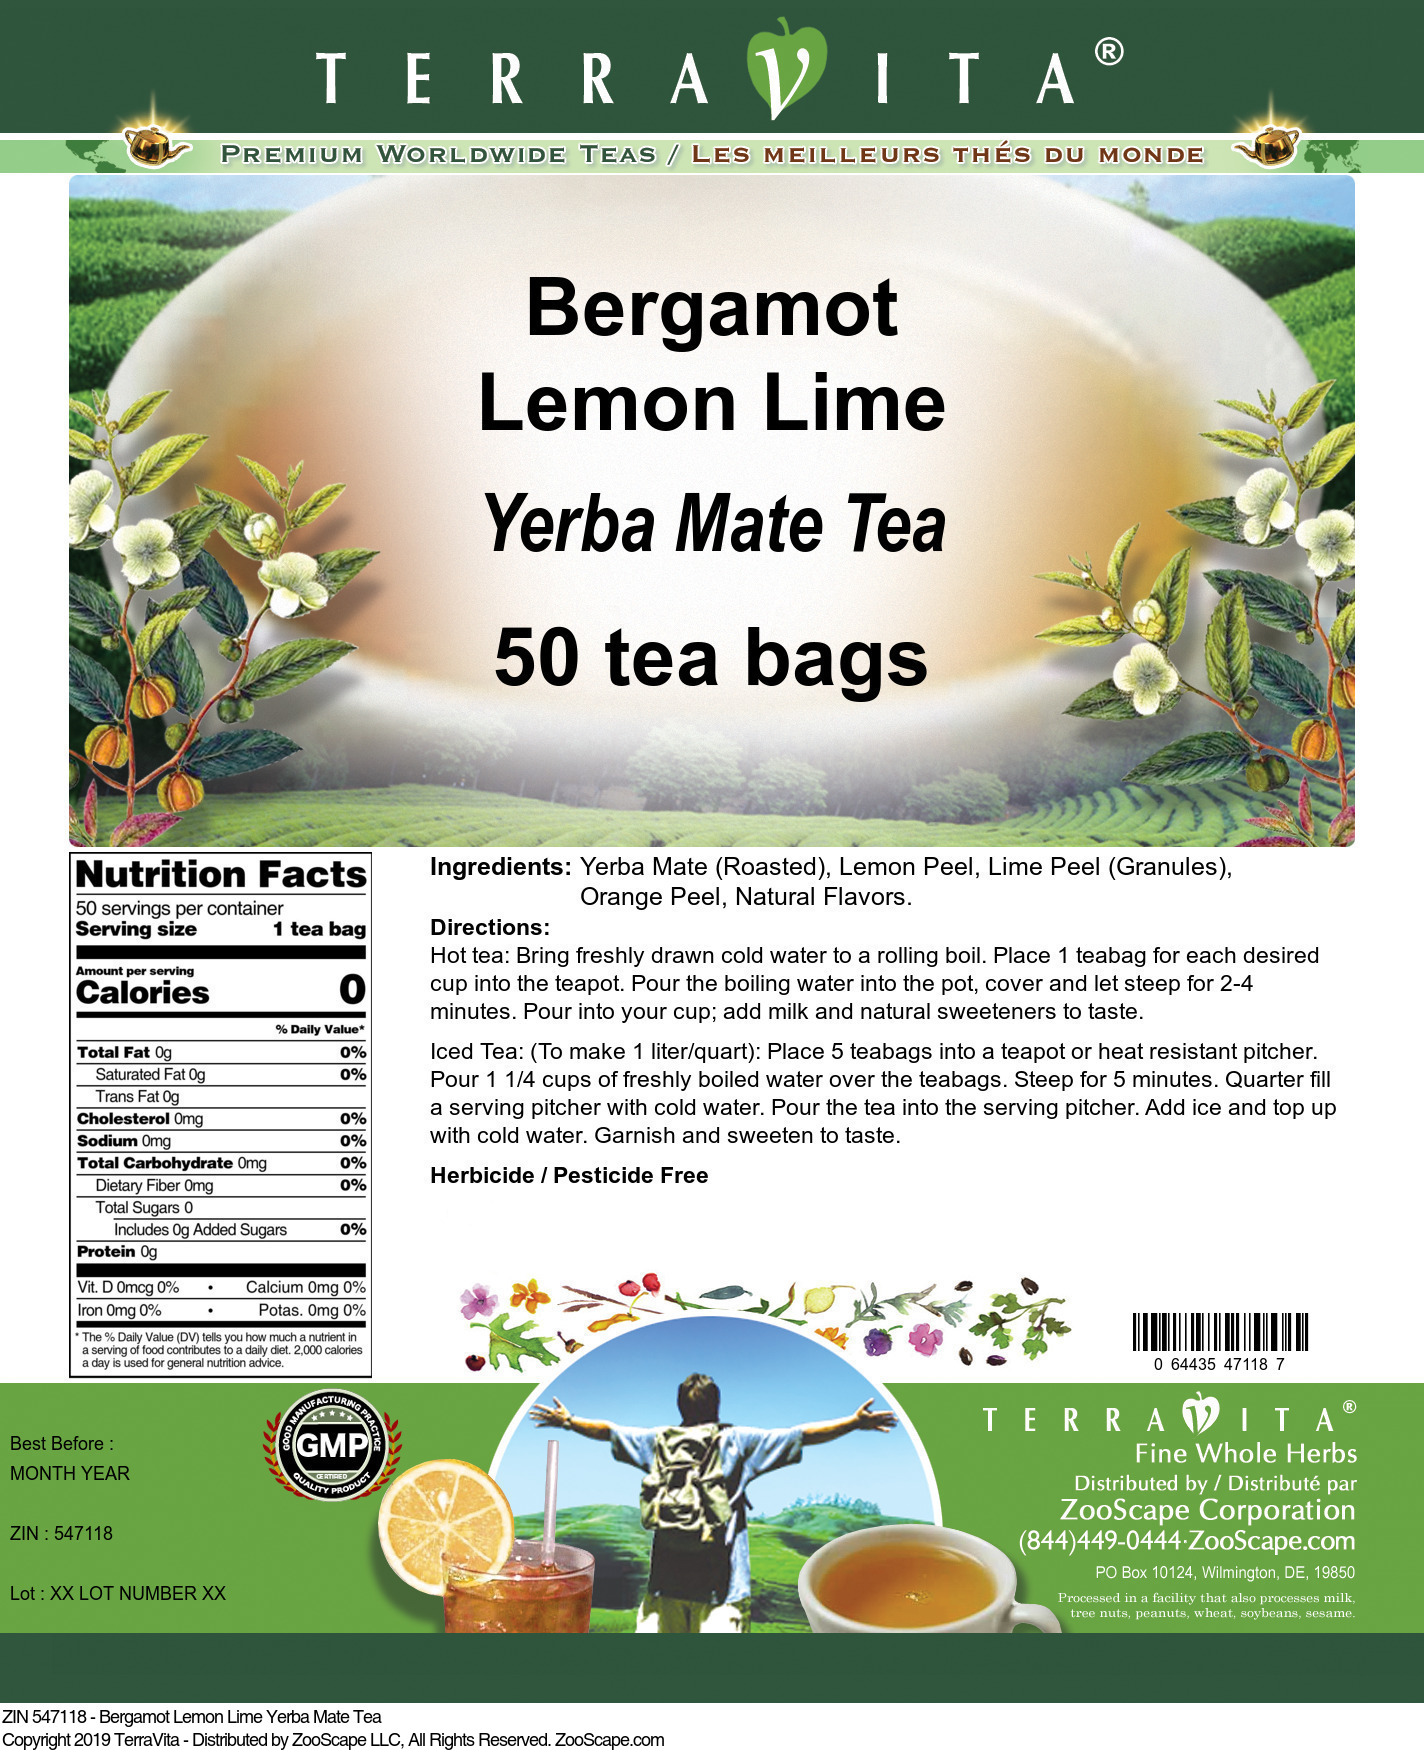 Bergamot Lemon Lime Yerba Mate Tea - Label